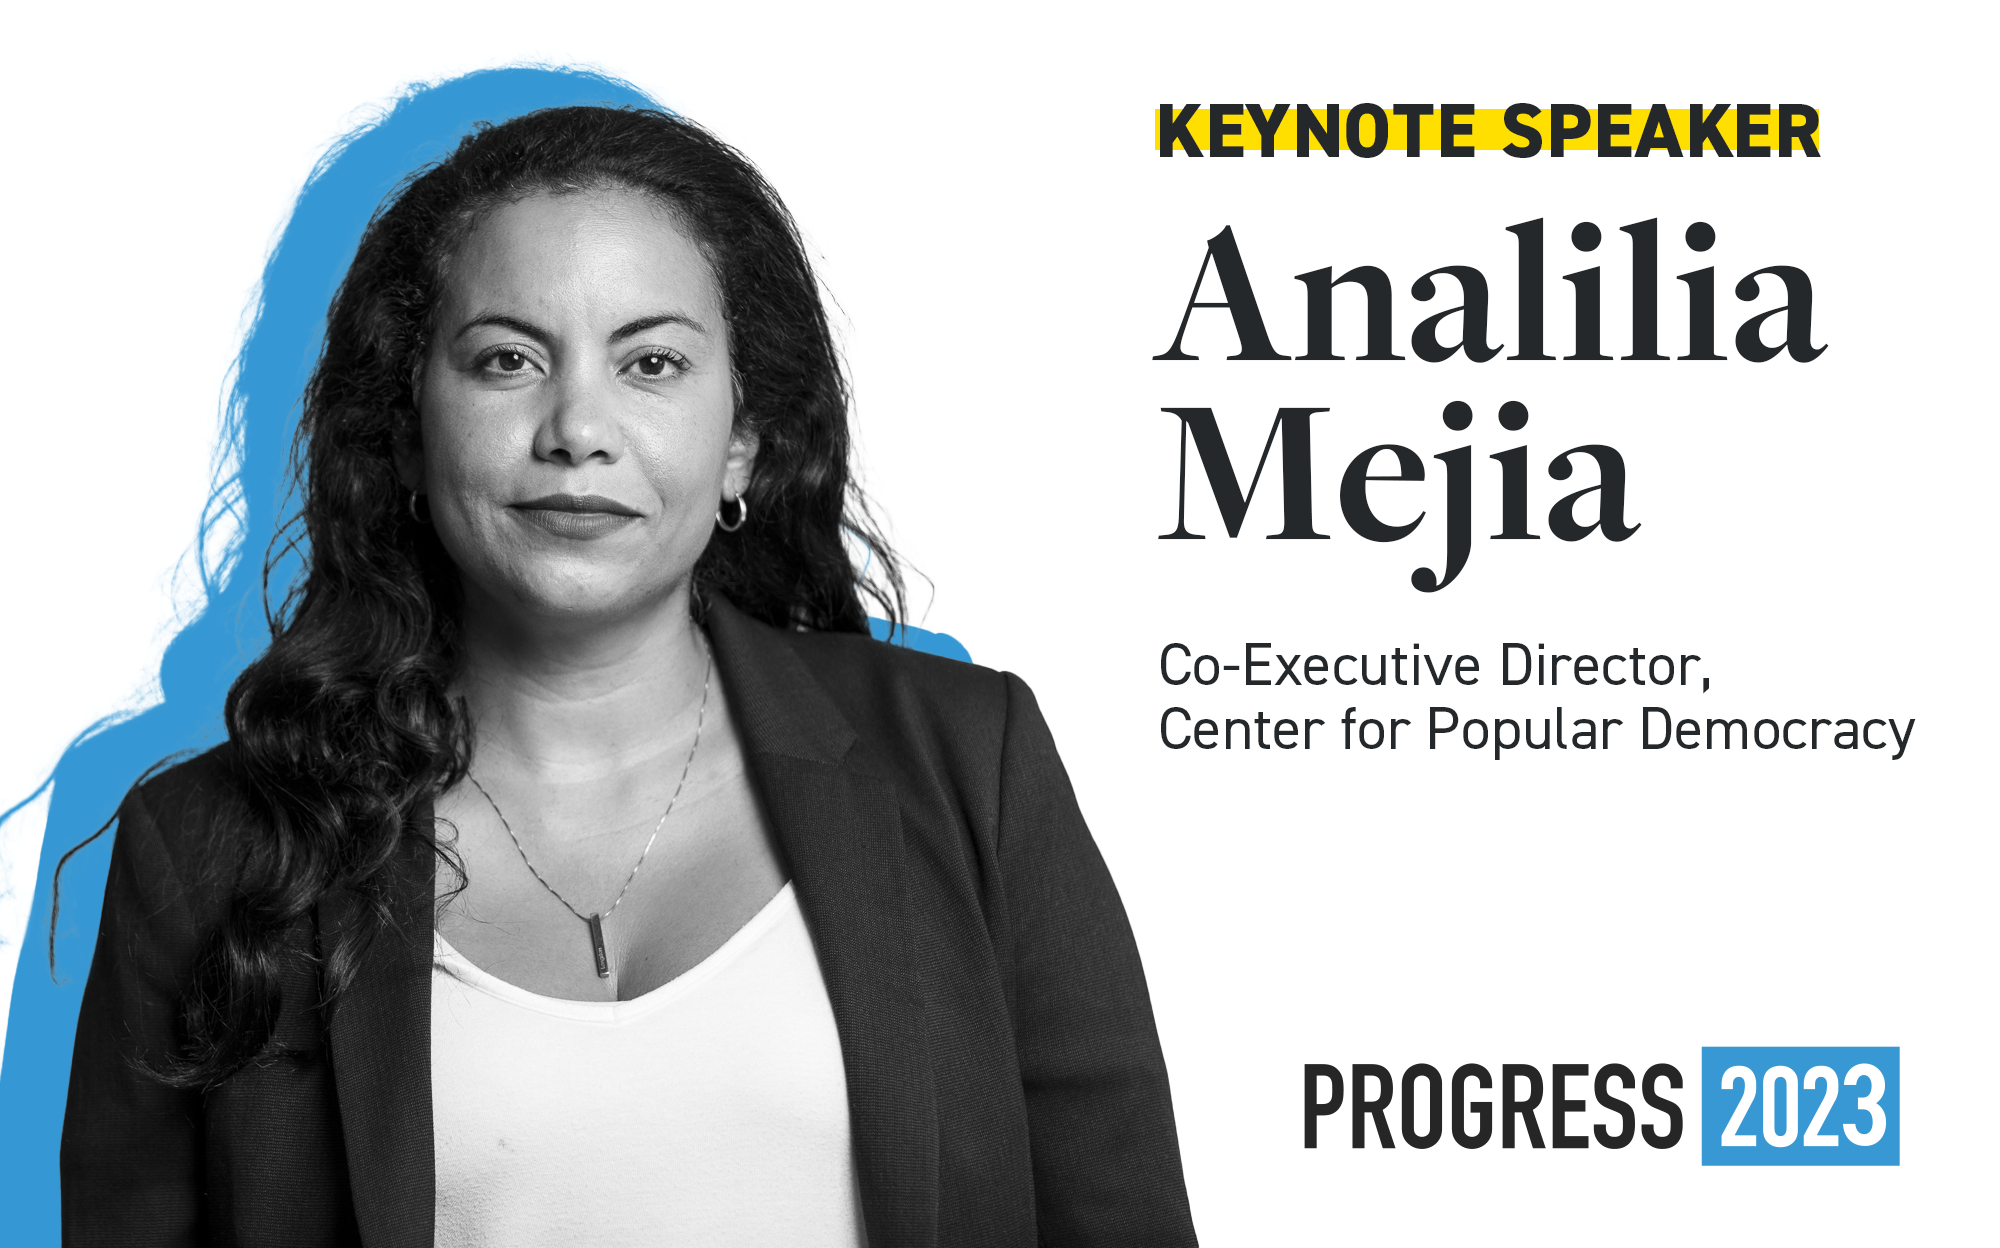 Keynote Speaker Analilia Mejia, Co-Executive Director, Center for Popular Democracy